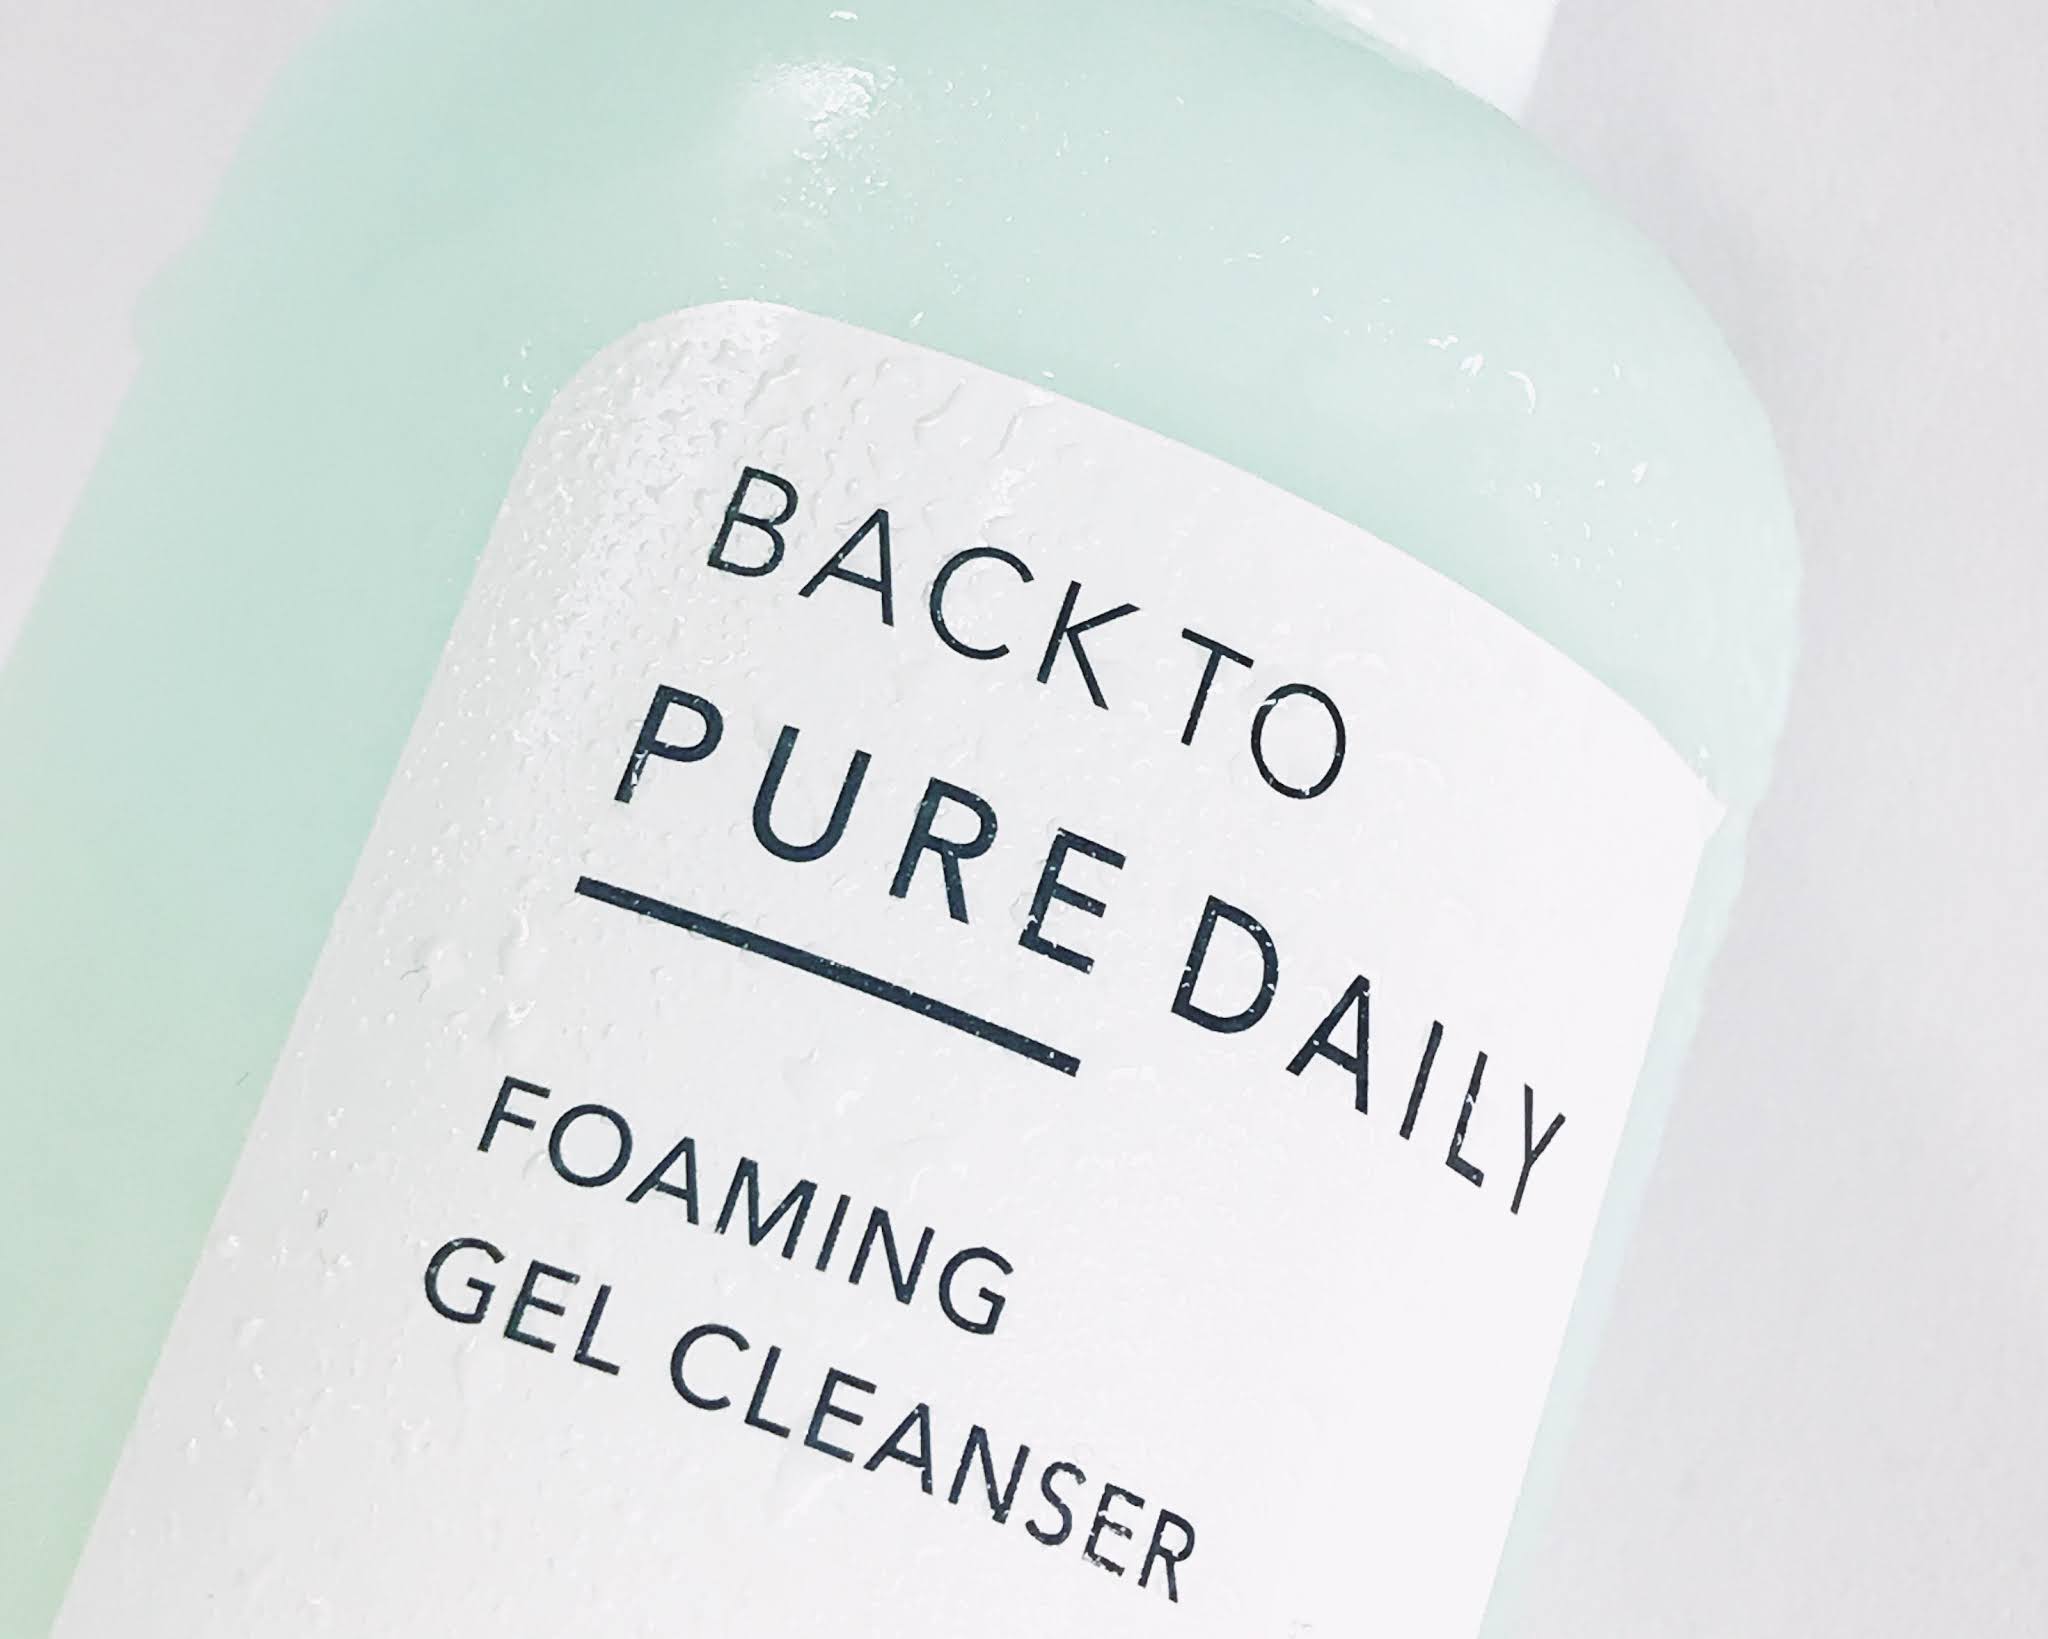 Foaming gel cleanser. Back to Pure Daily Foaming Gel Cleanser. Thank you Farmer пилинг скатка. Soskin Foaming Cleansing Gel. Pure Cleansing Gel.